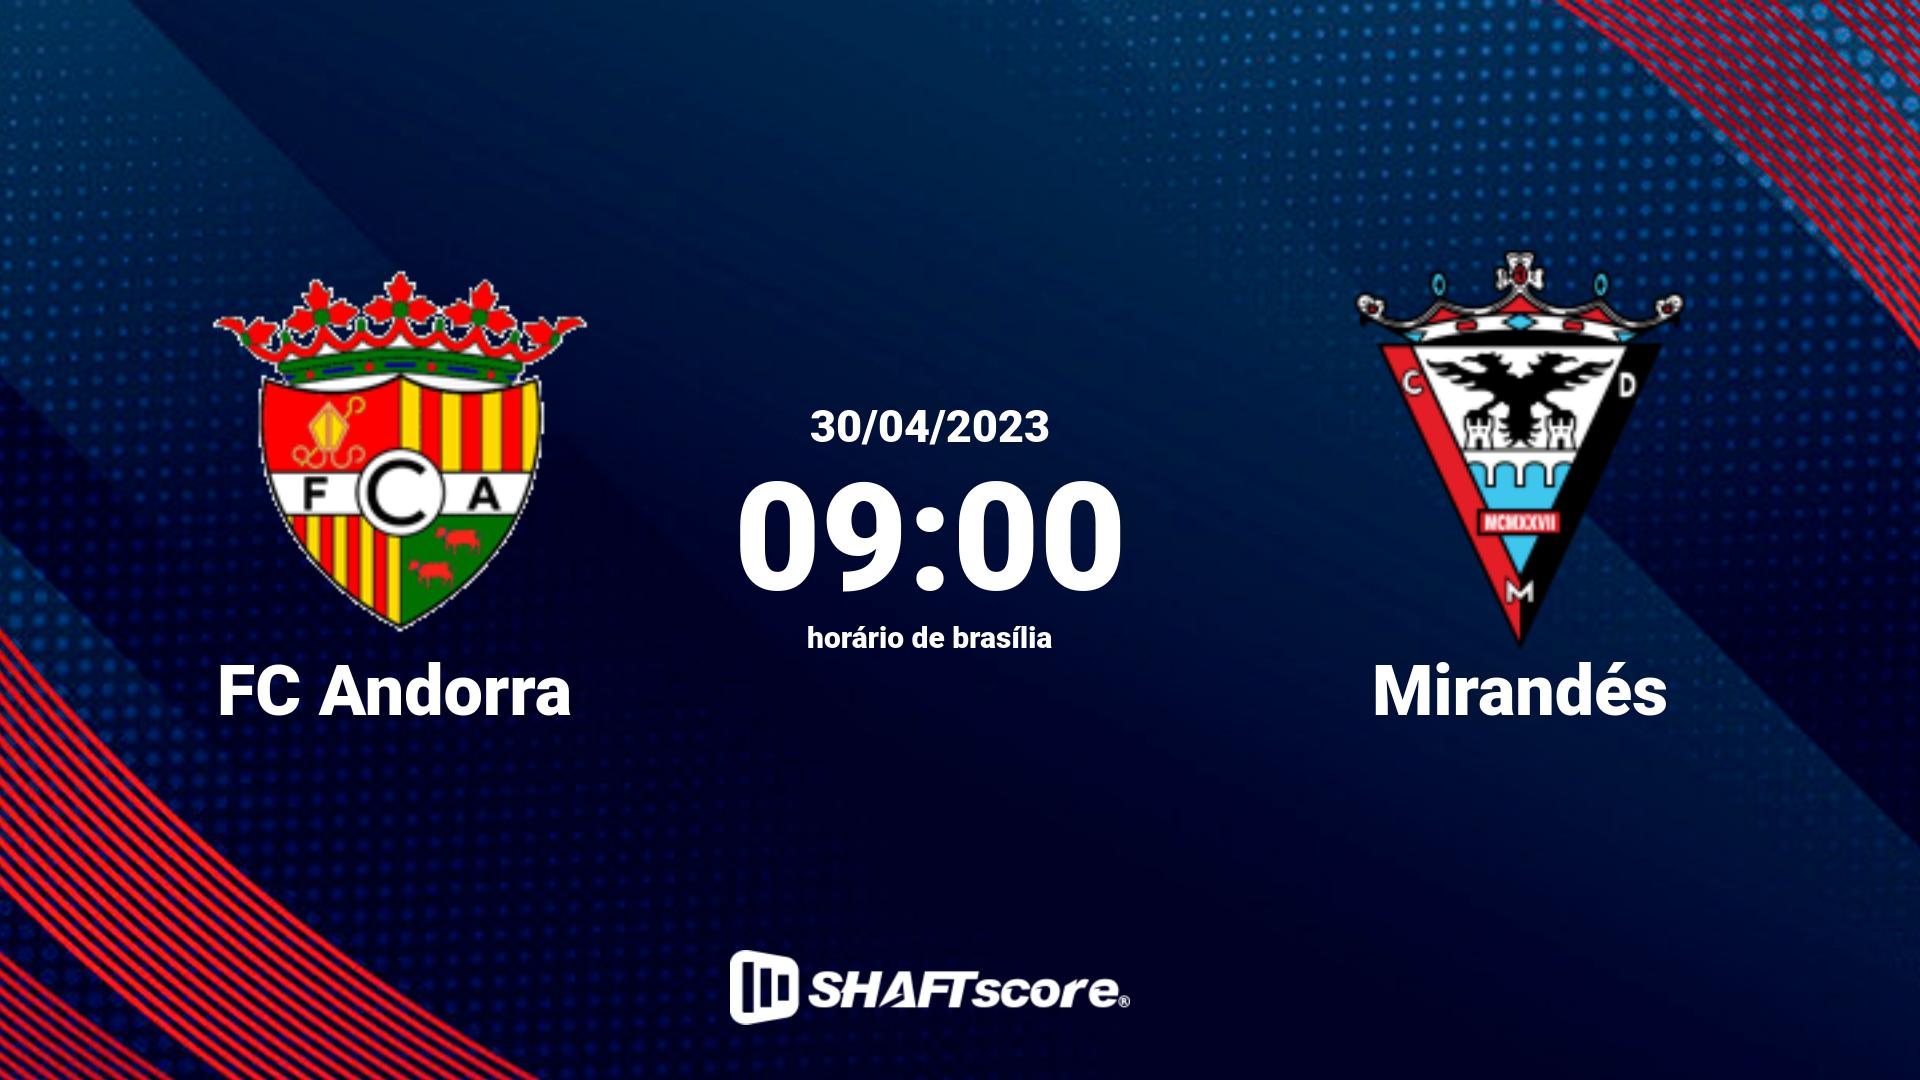 Estatísticas do jogo FC Andorra vs Mirandés 30.04 09:00